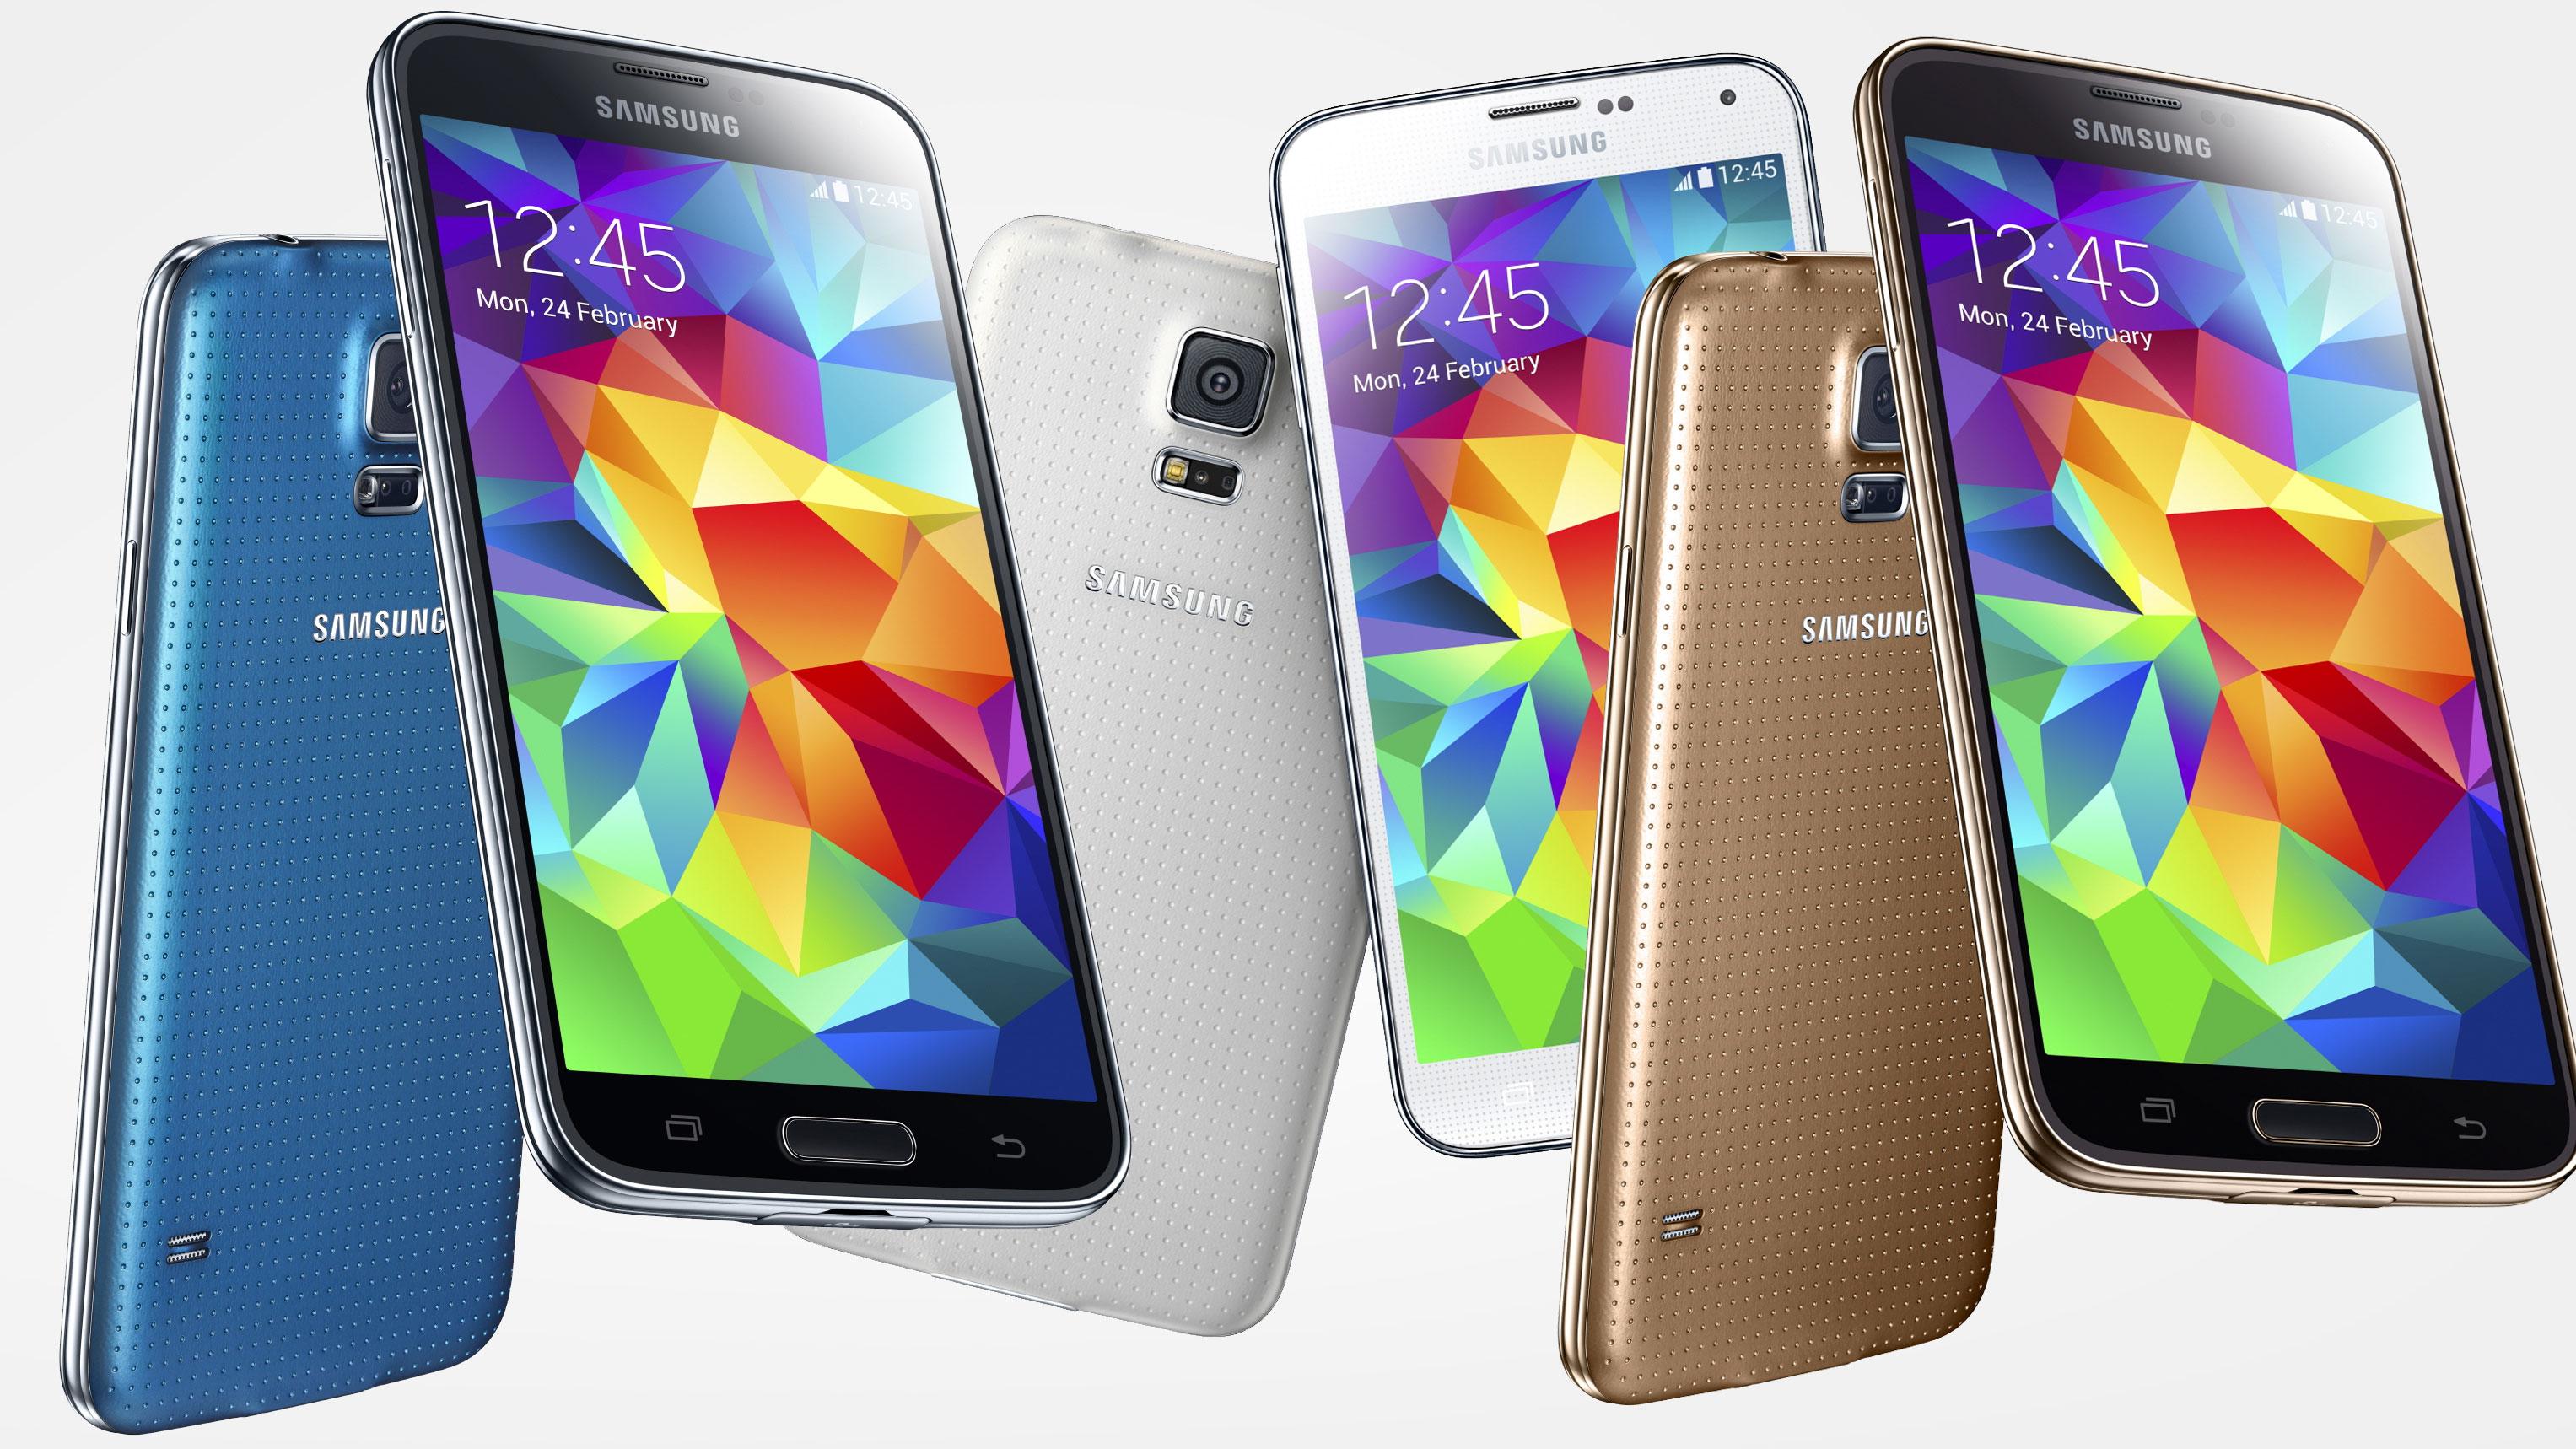 Det er ventet at Samsungs nye flaggskip Galaxy S5 blir en storselger.Foto: Samsung